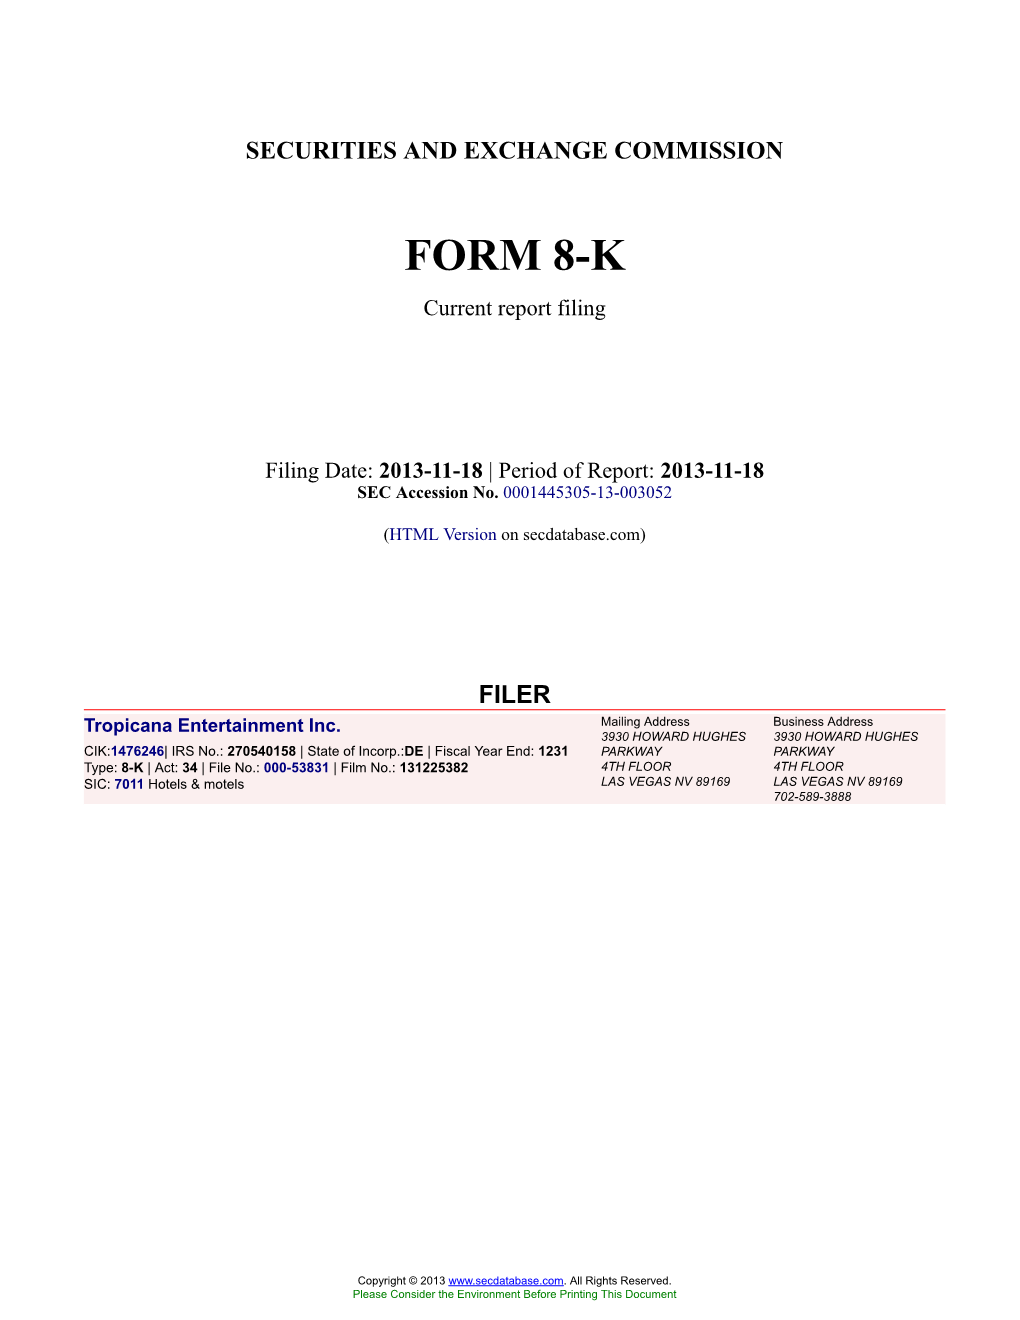 Tropicana Entertainment Inc. Form 8-K Current Report Filed 2013-11-18